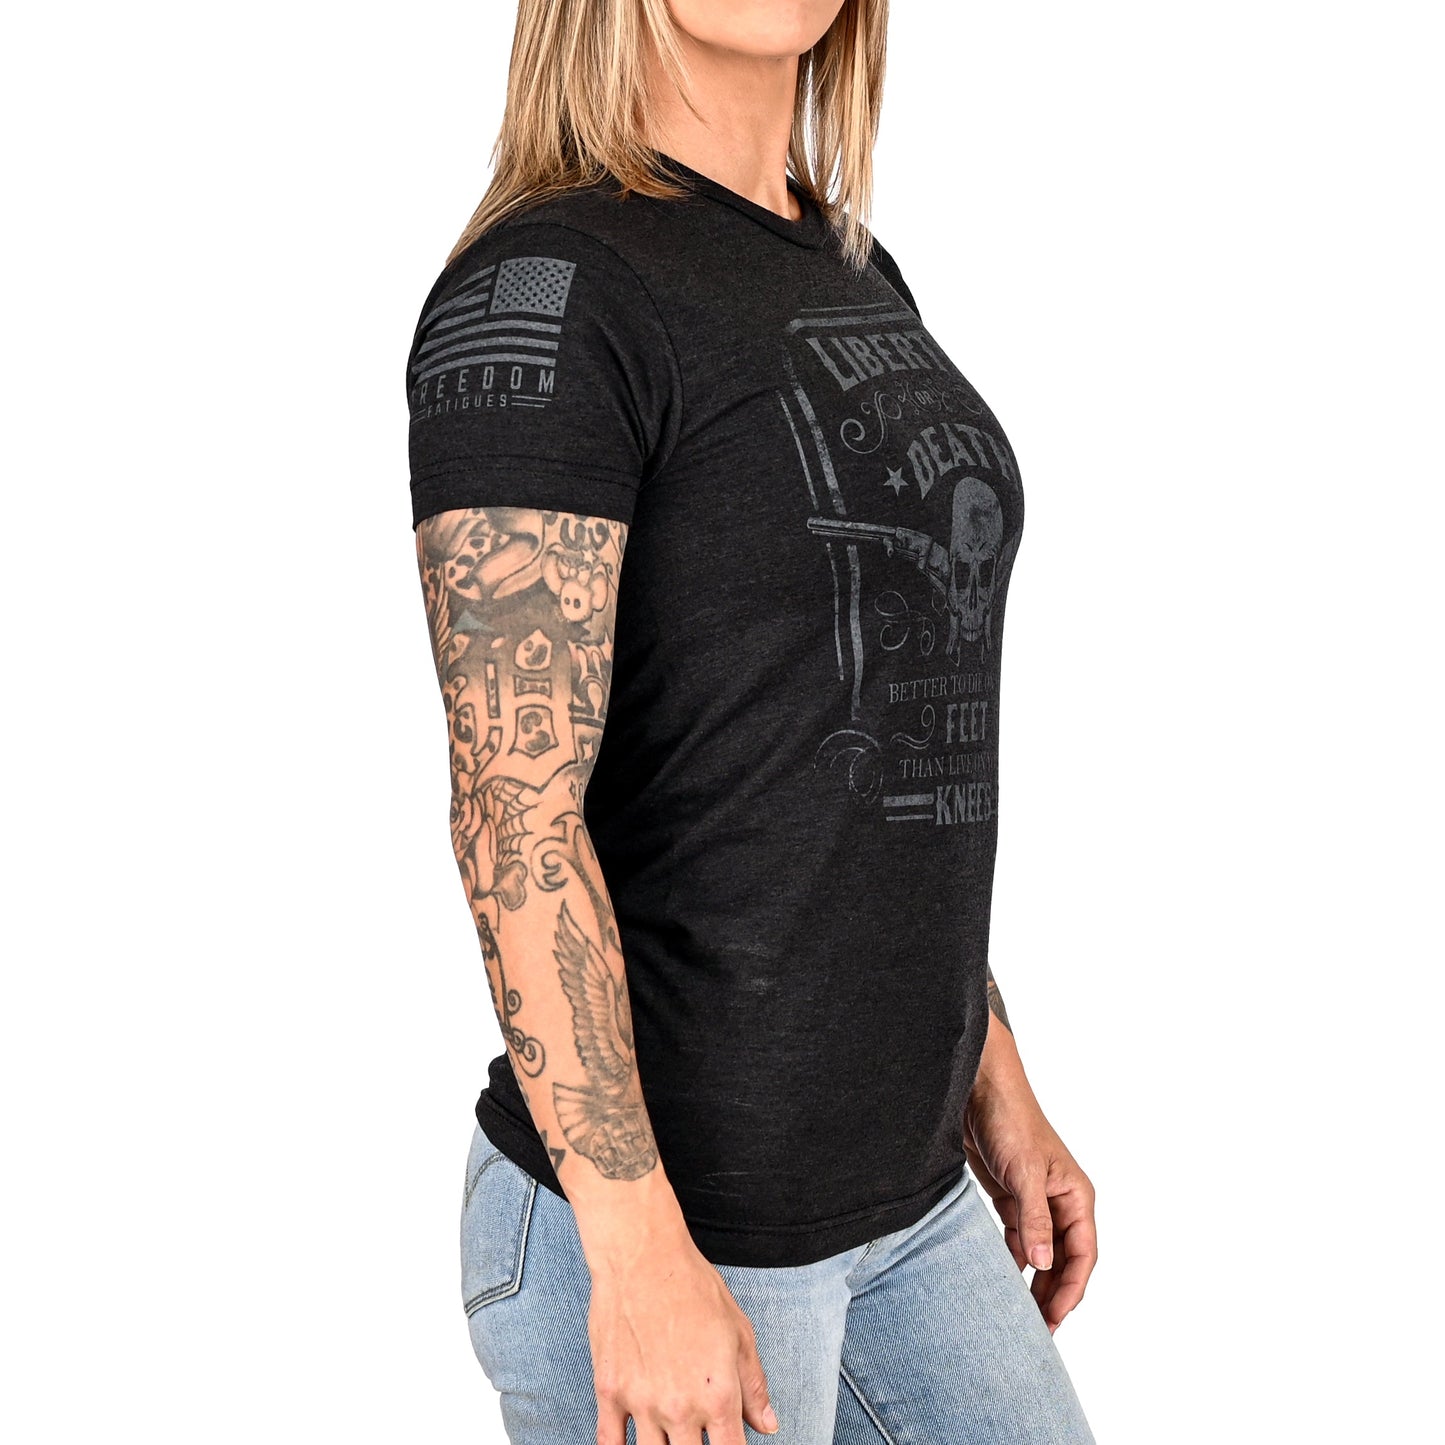 Women's Liberty or Death Patriotic Boyfriend Fit T-Shirt (Black on Black)